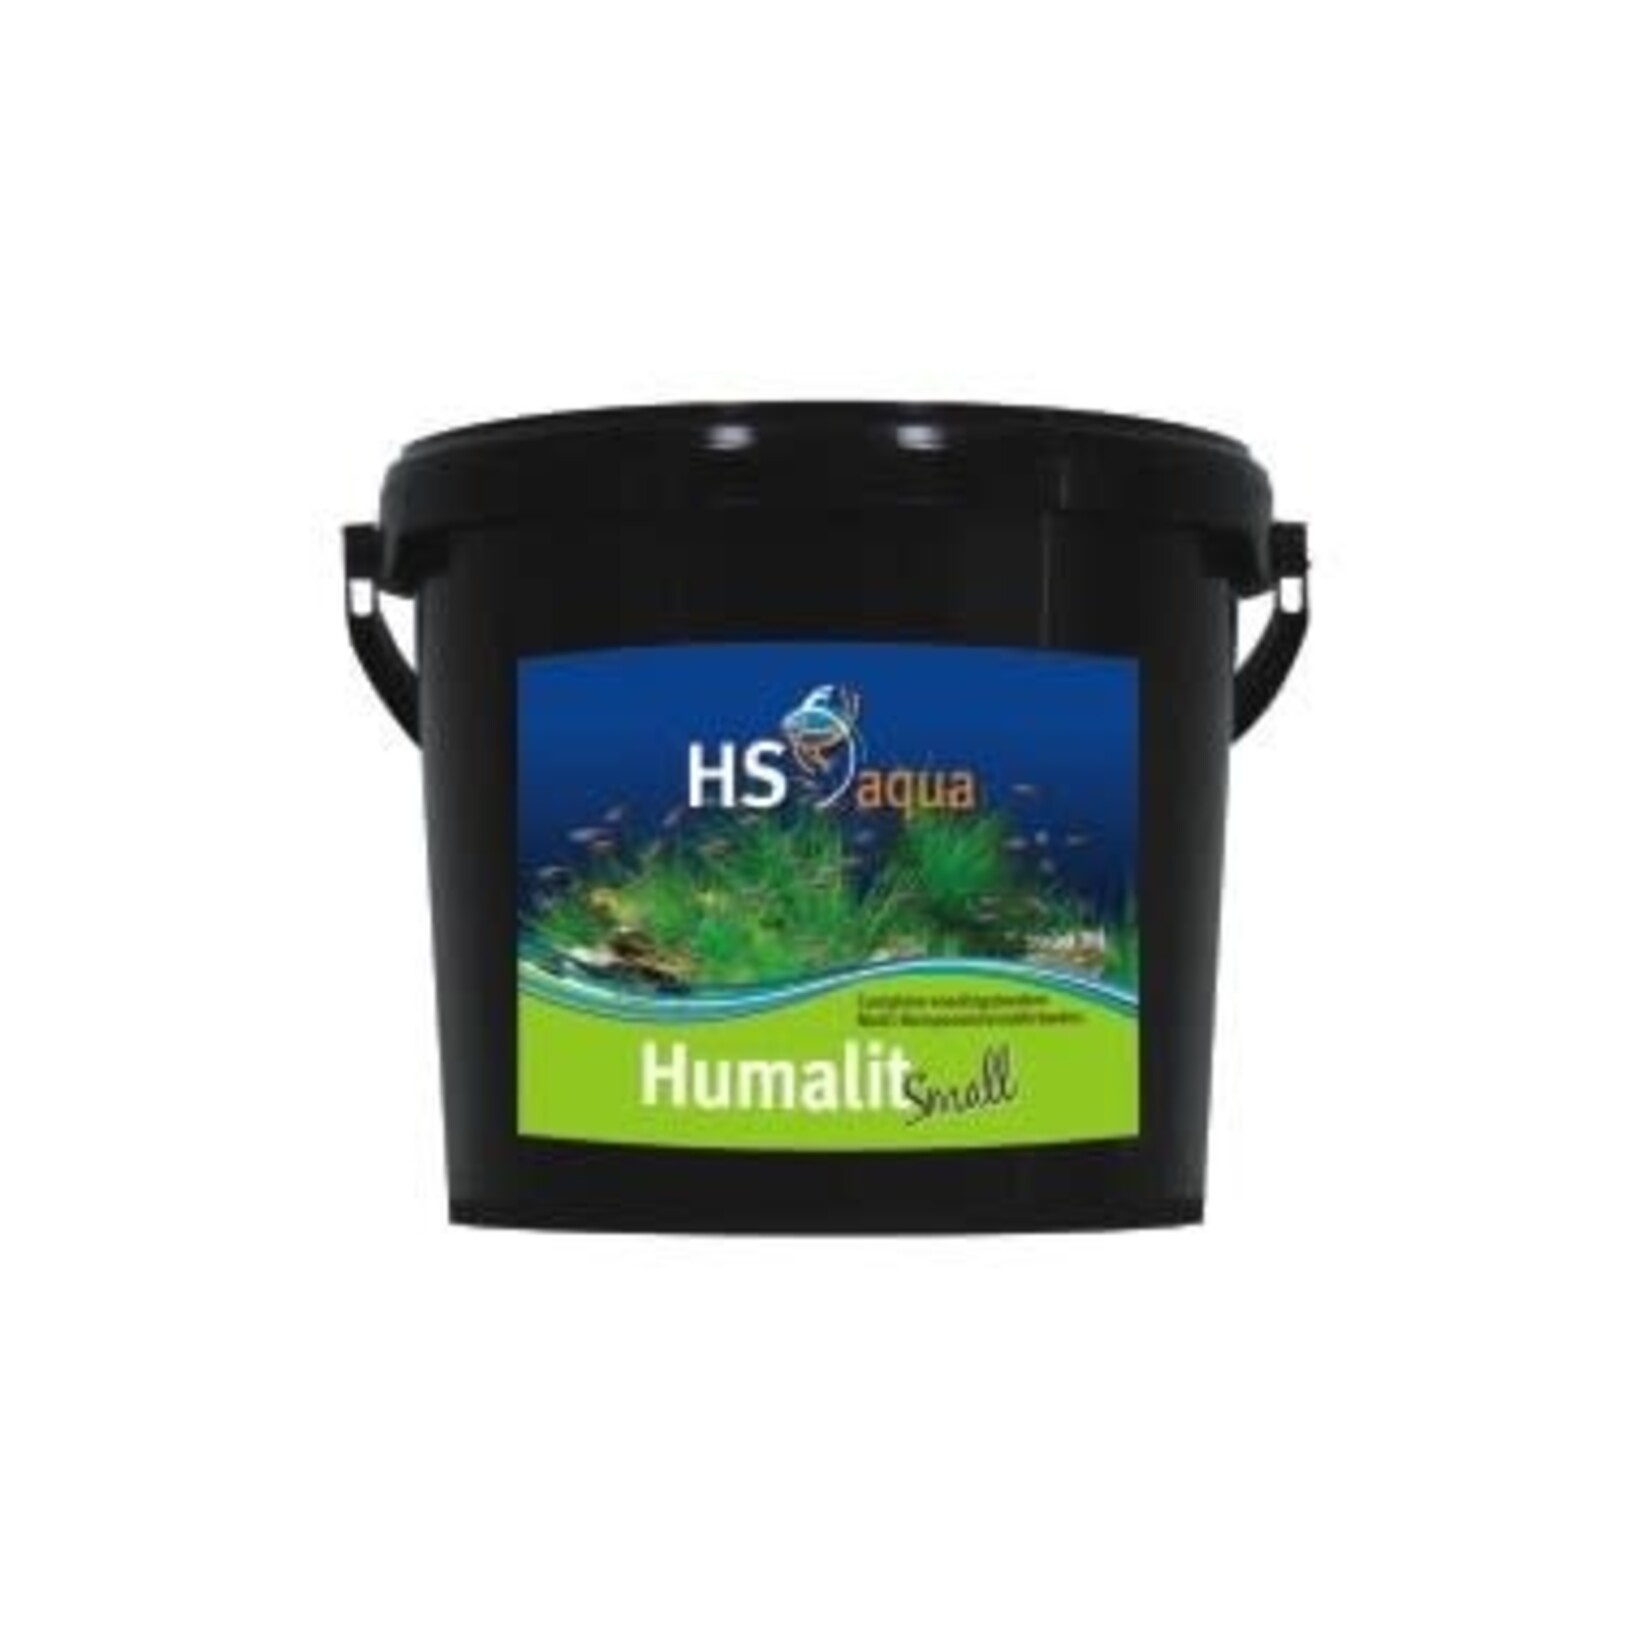 HS Aqua Humalit small 1000 ml